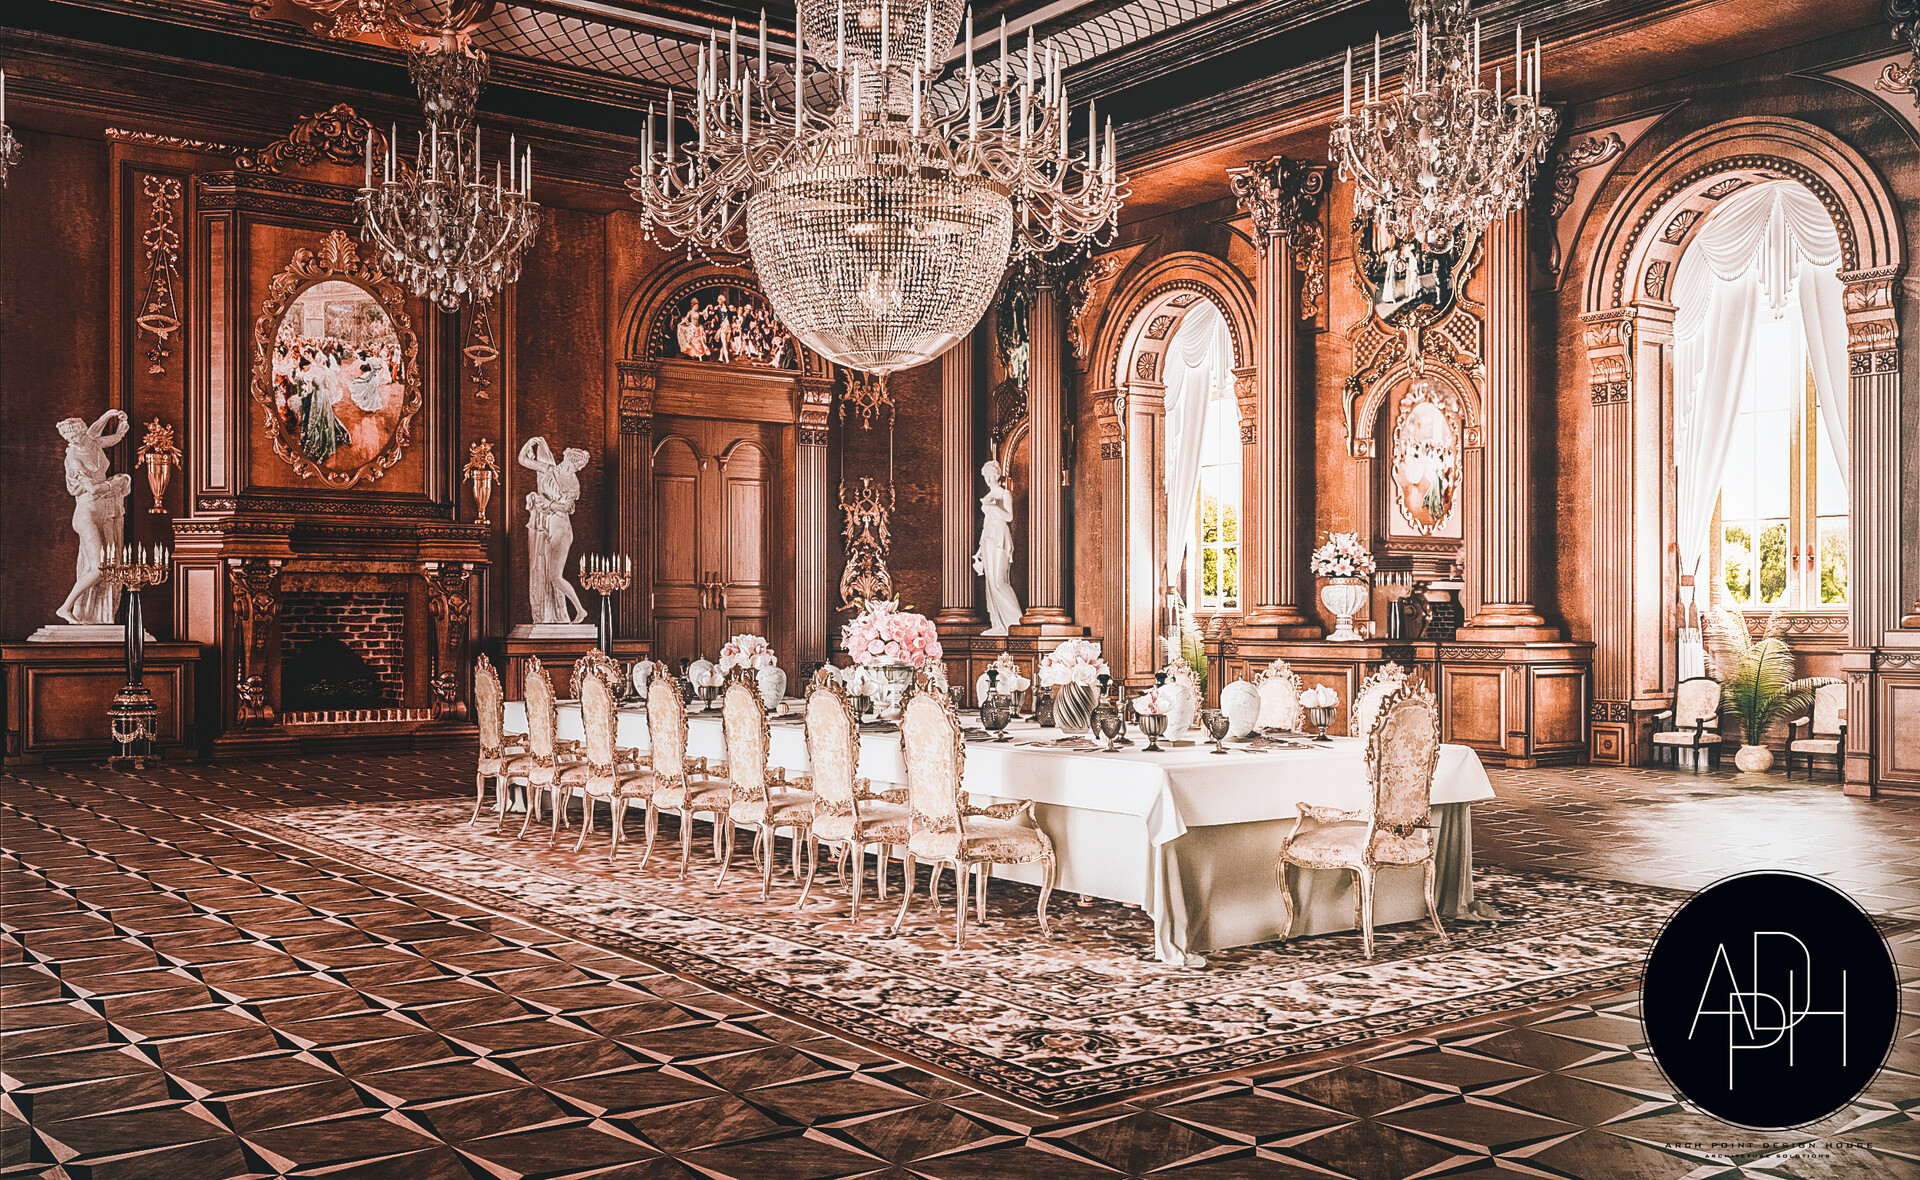 palace dining room set